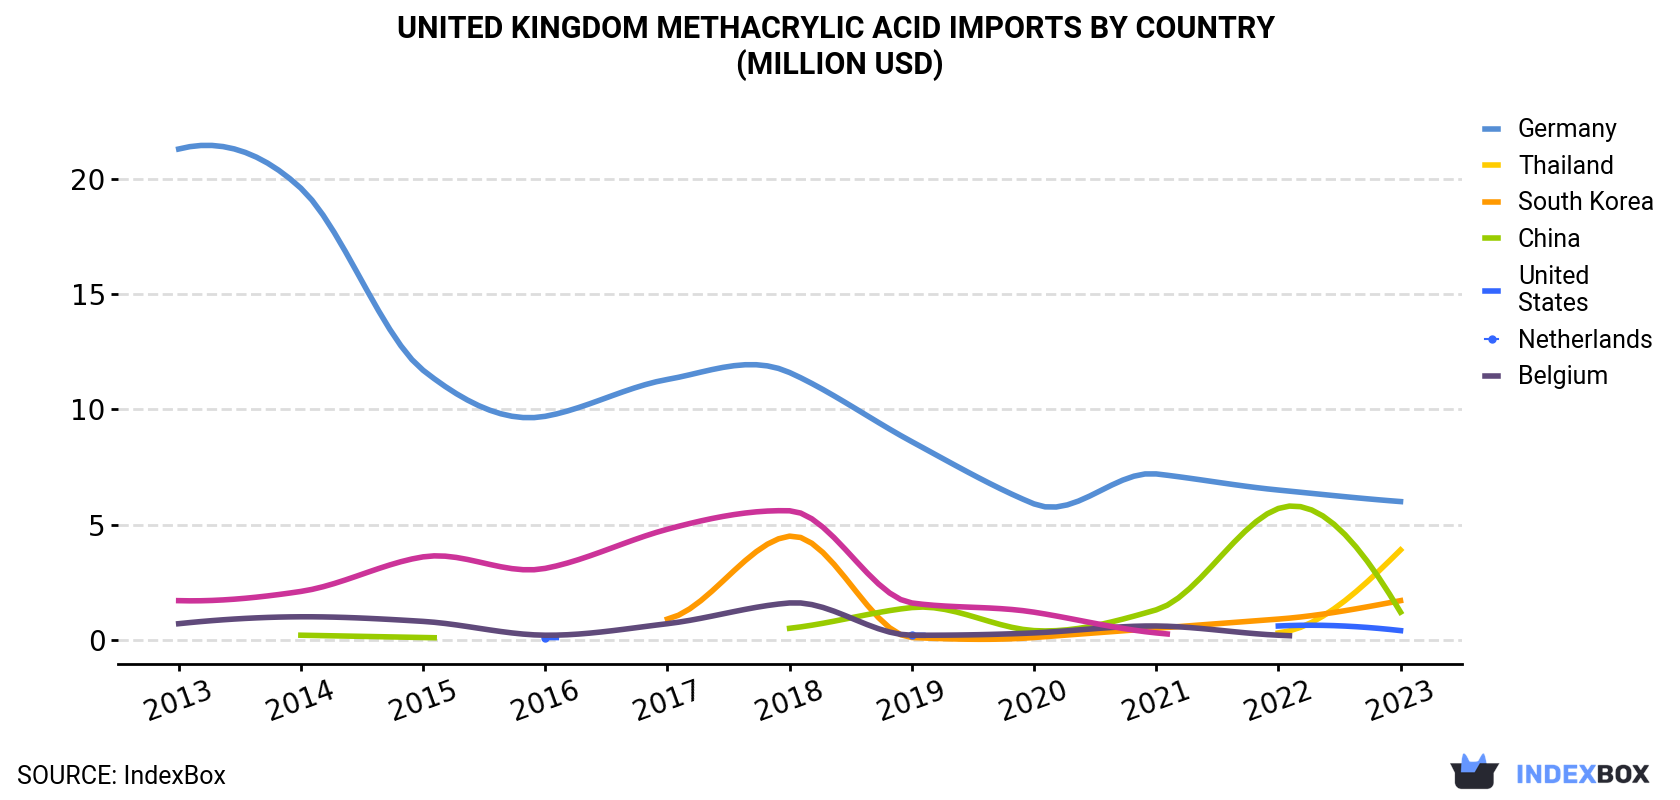 United Kingdom Methacrylic Acid Imports By Country (Million USD)